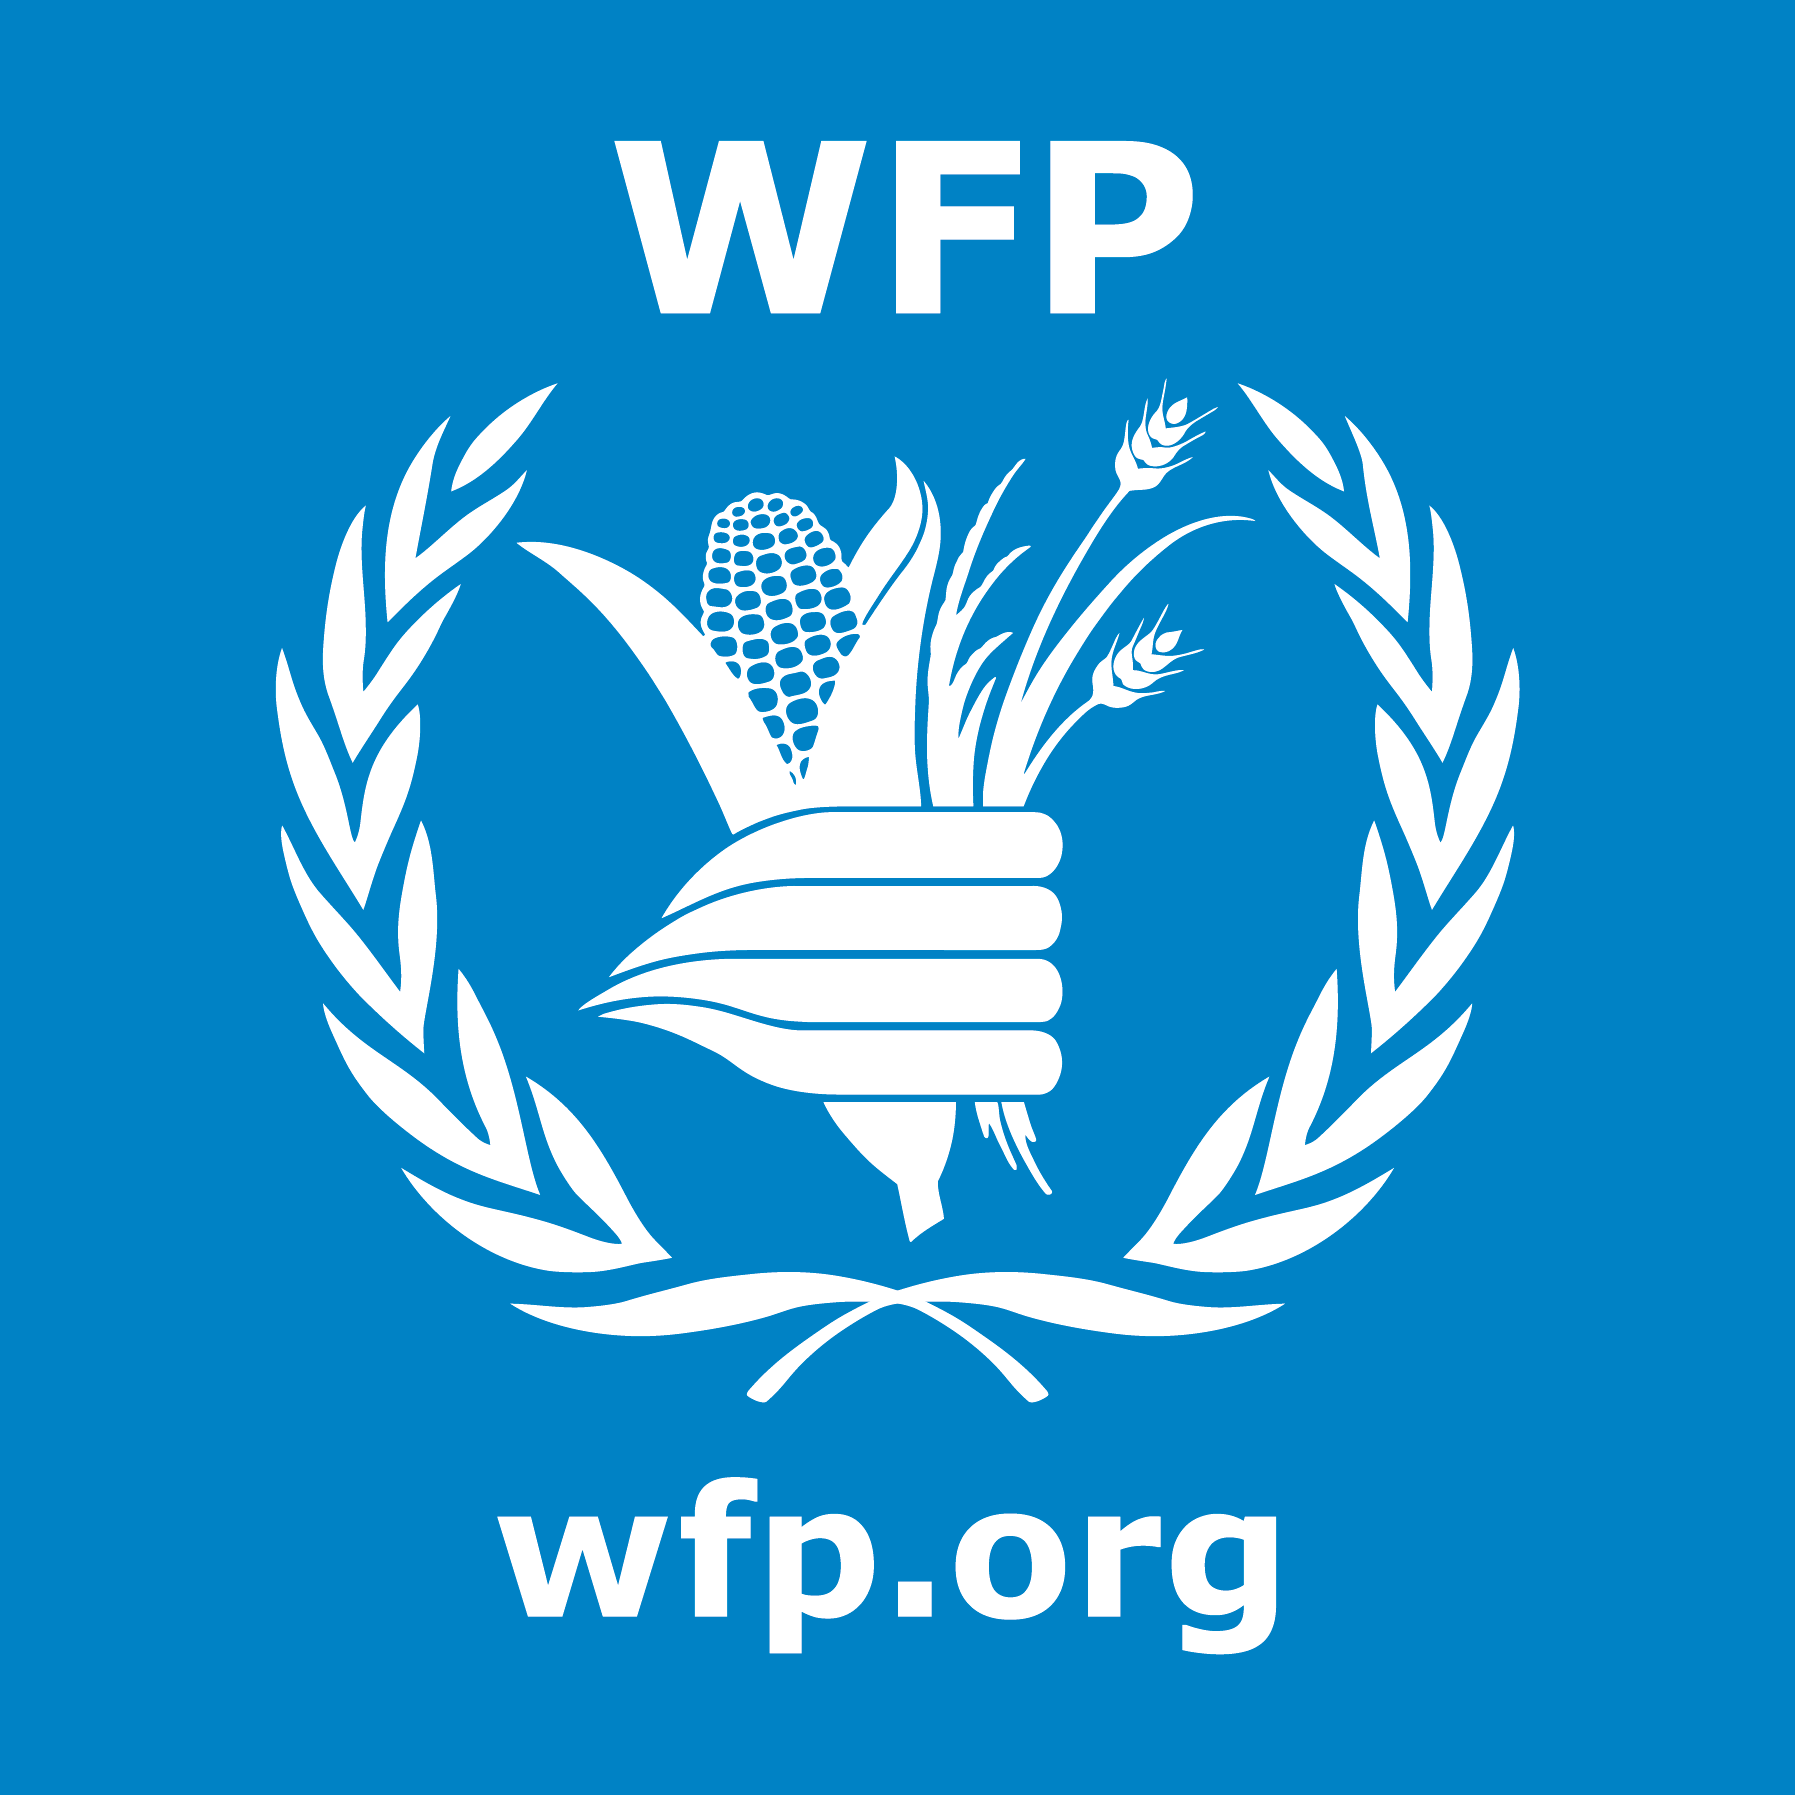 World Food Program logo